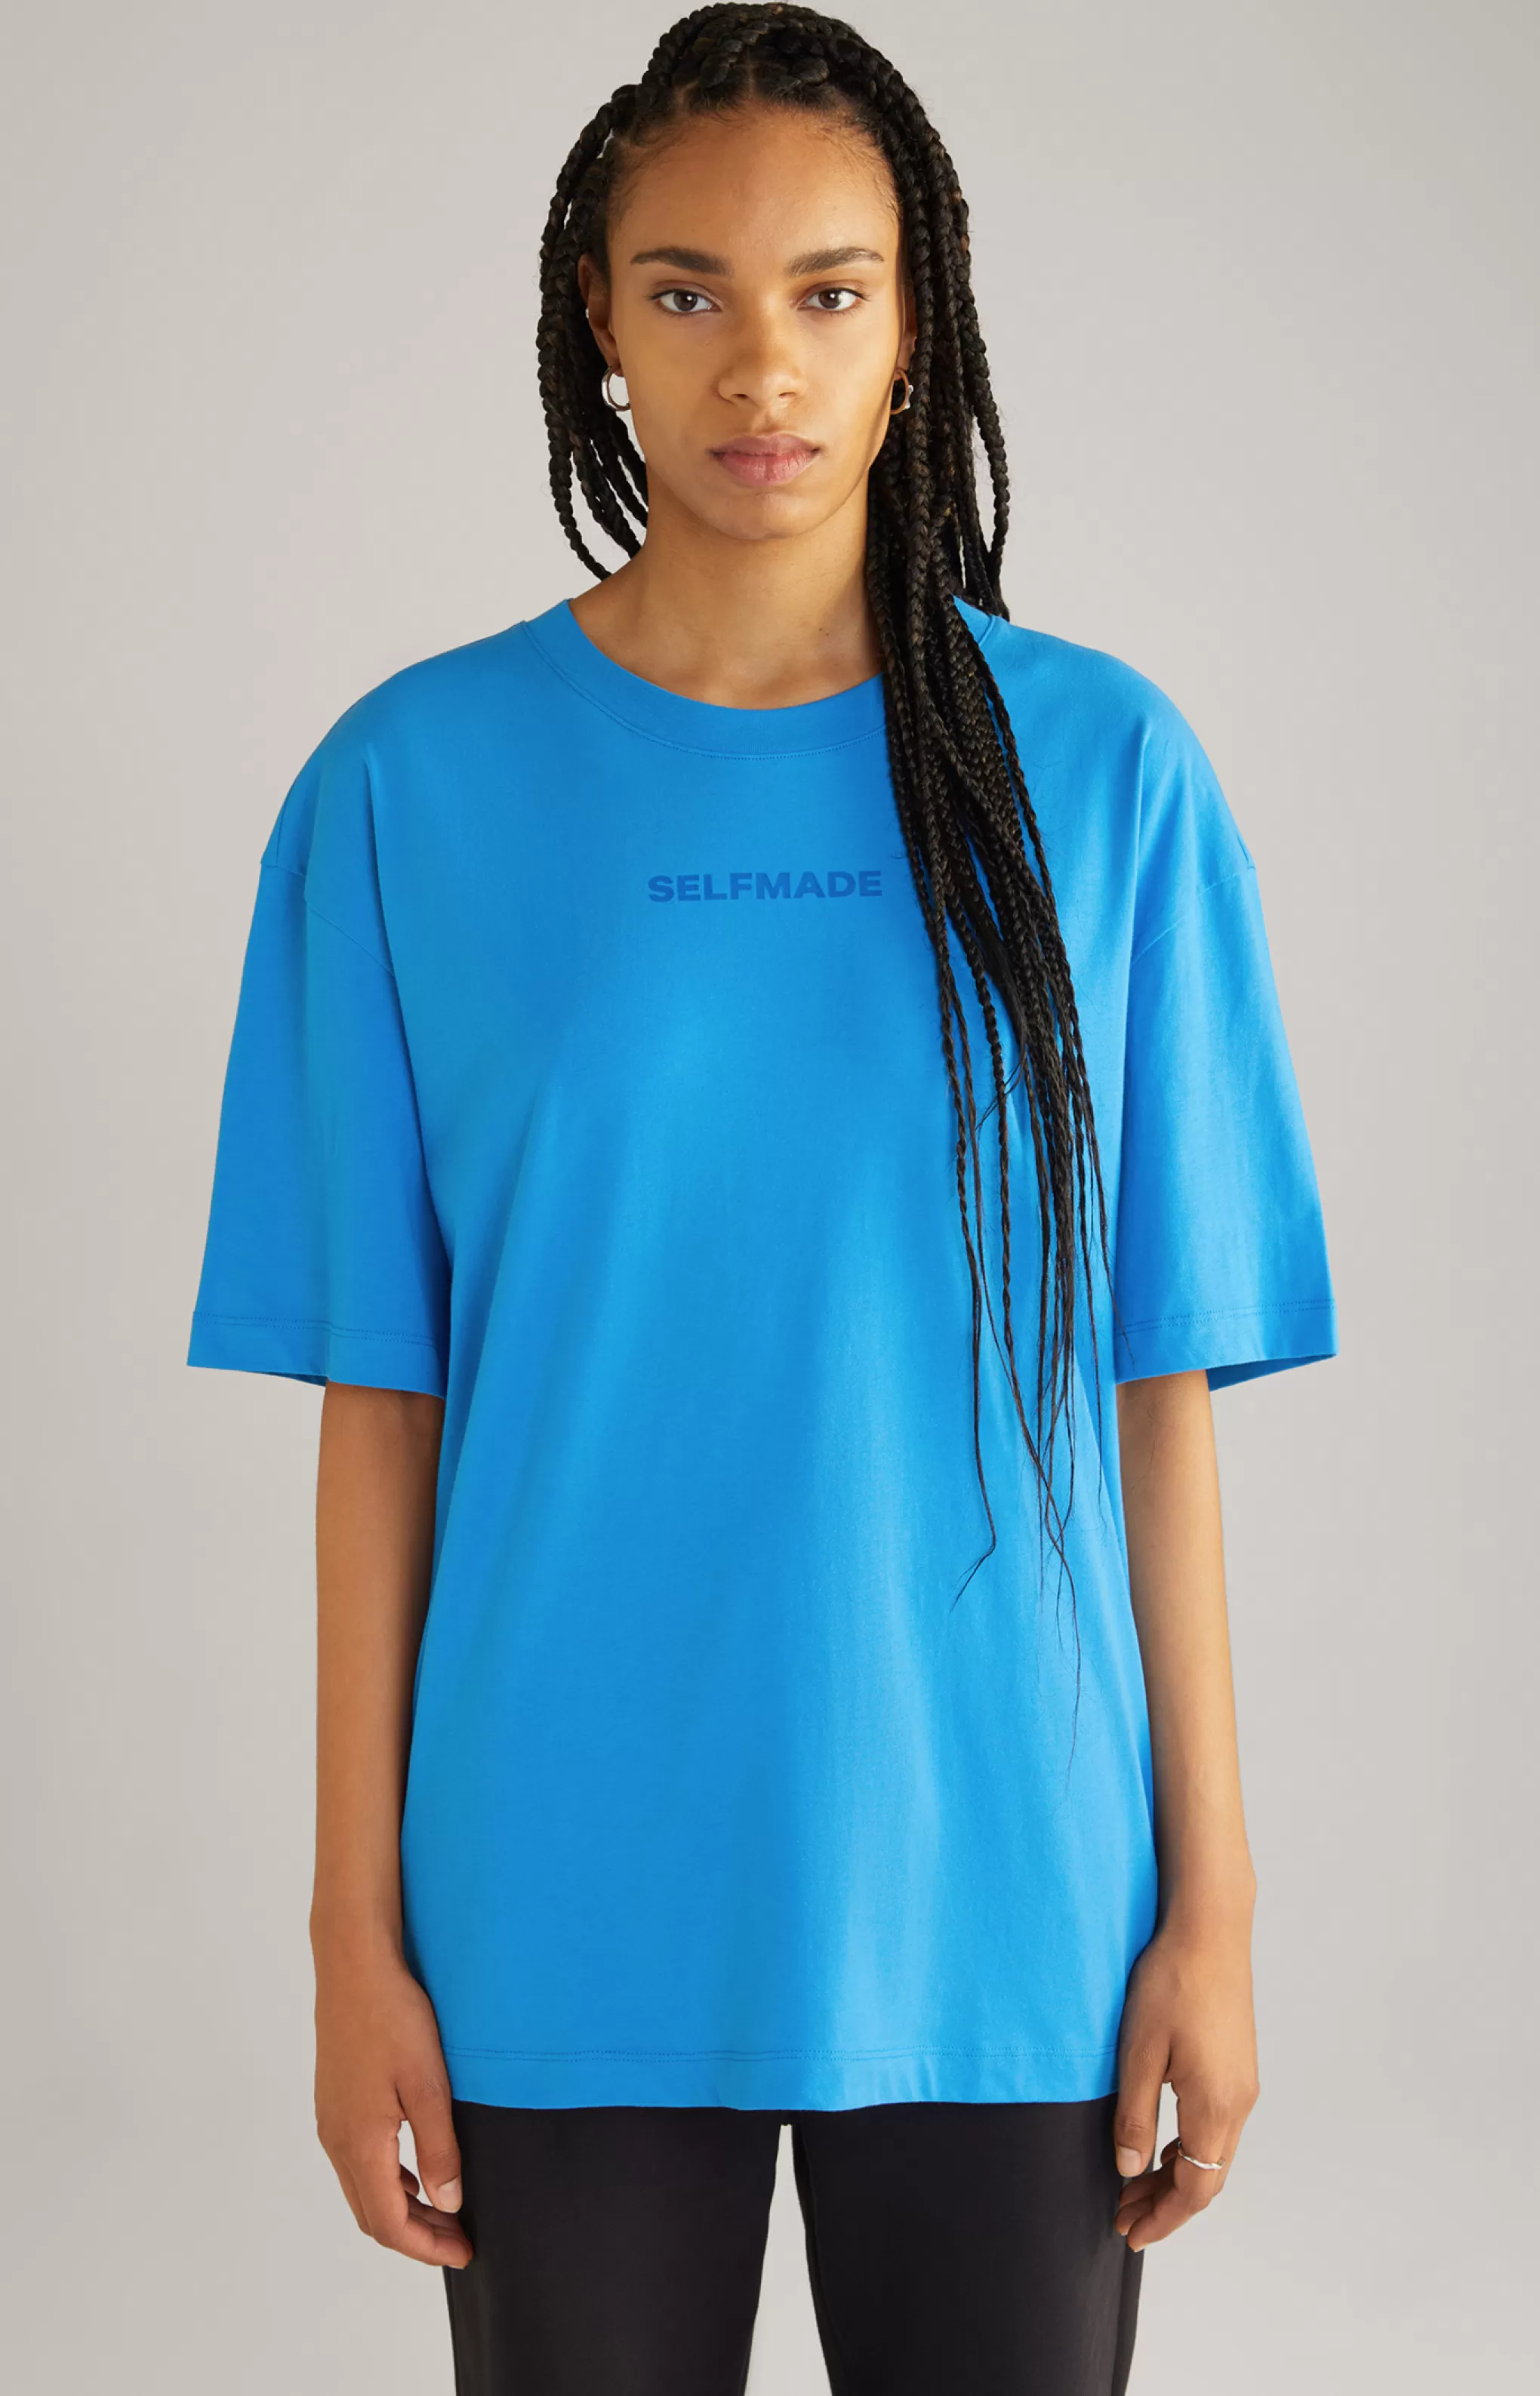 Shirts & Sweats | T-shirts*JOOP Shirts & Sweats | T-shirts Unisex Cotton T-shirt in